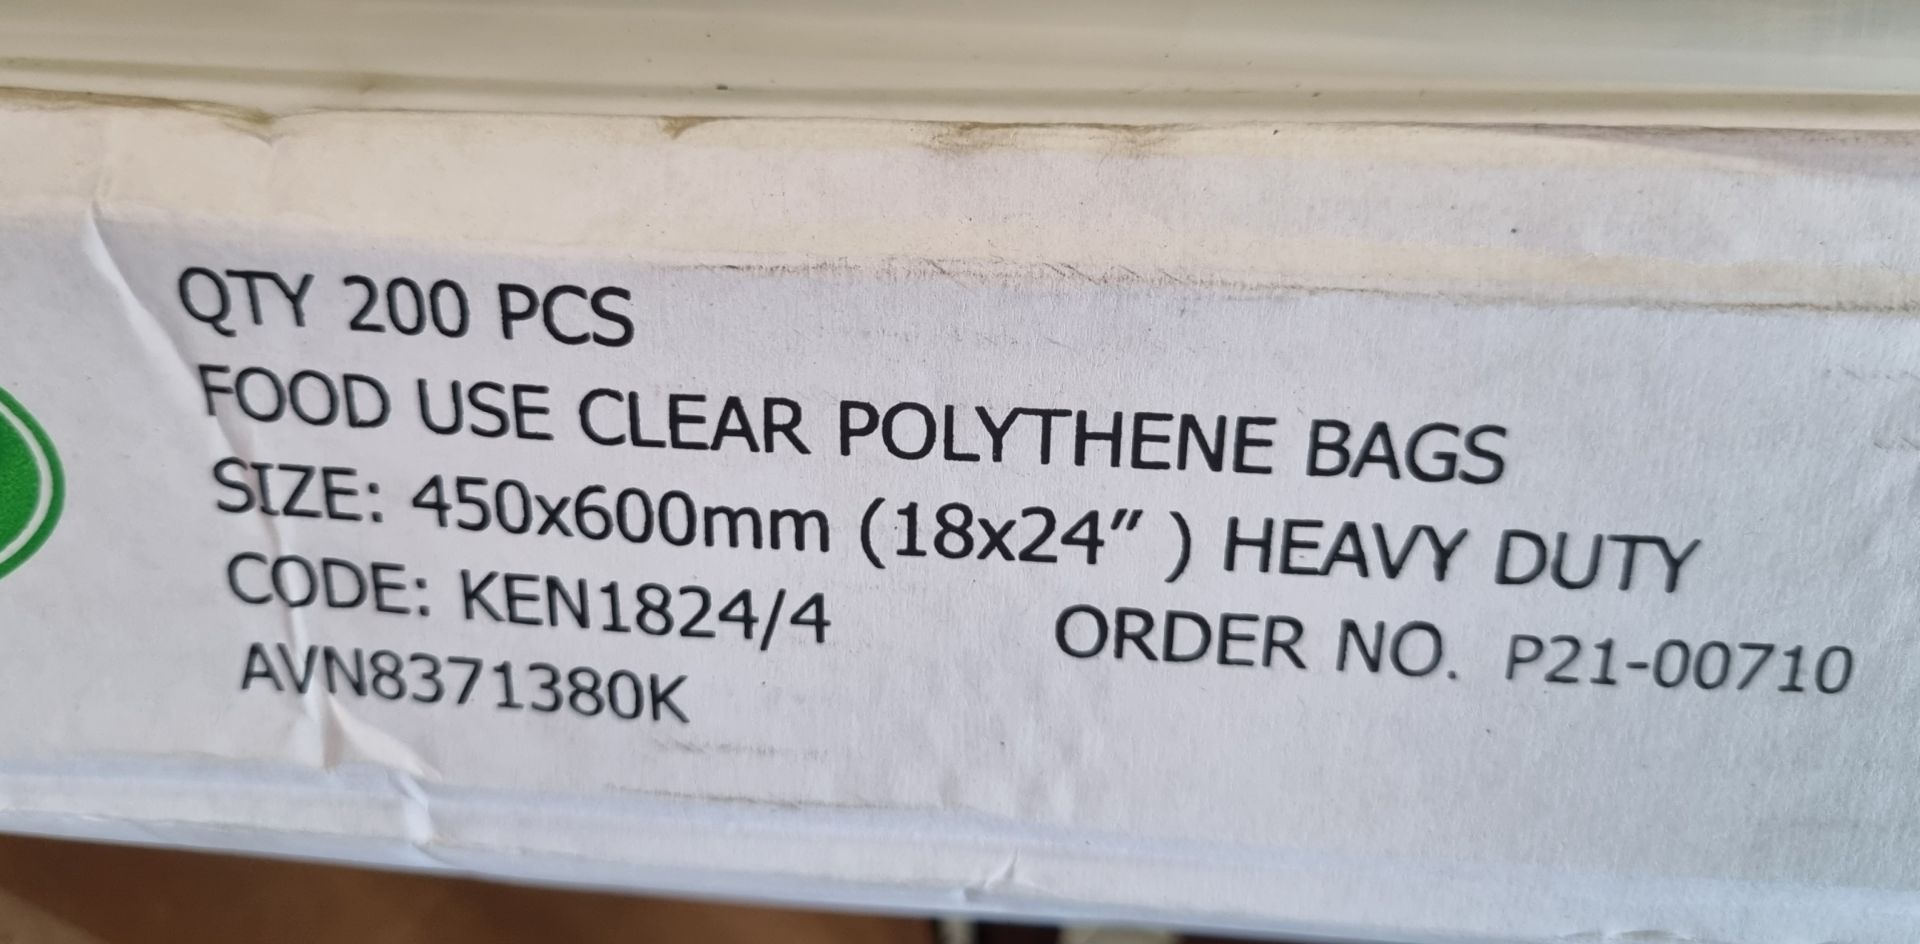 Swing bin liners, Food use clear polythene bags - Image 6 of 7